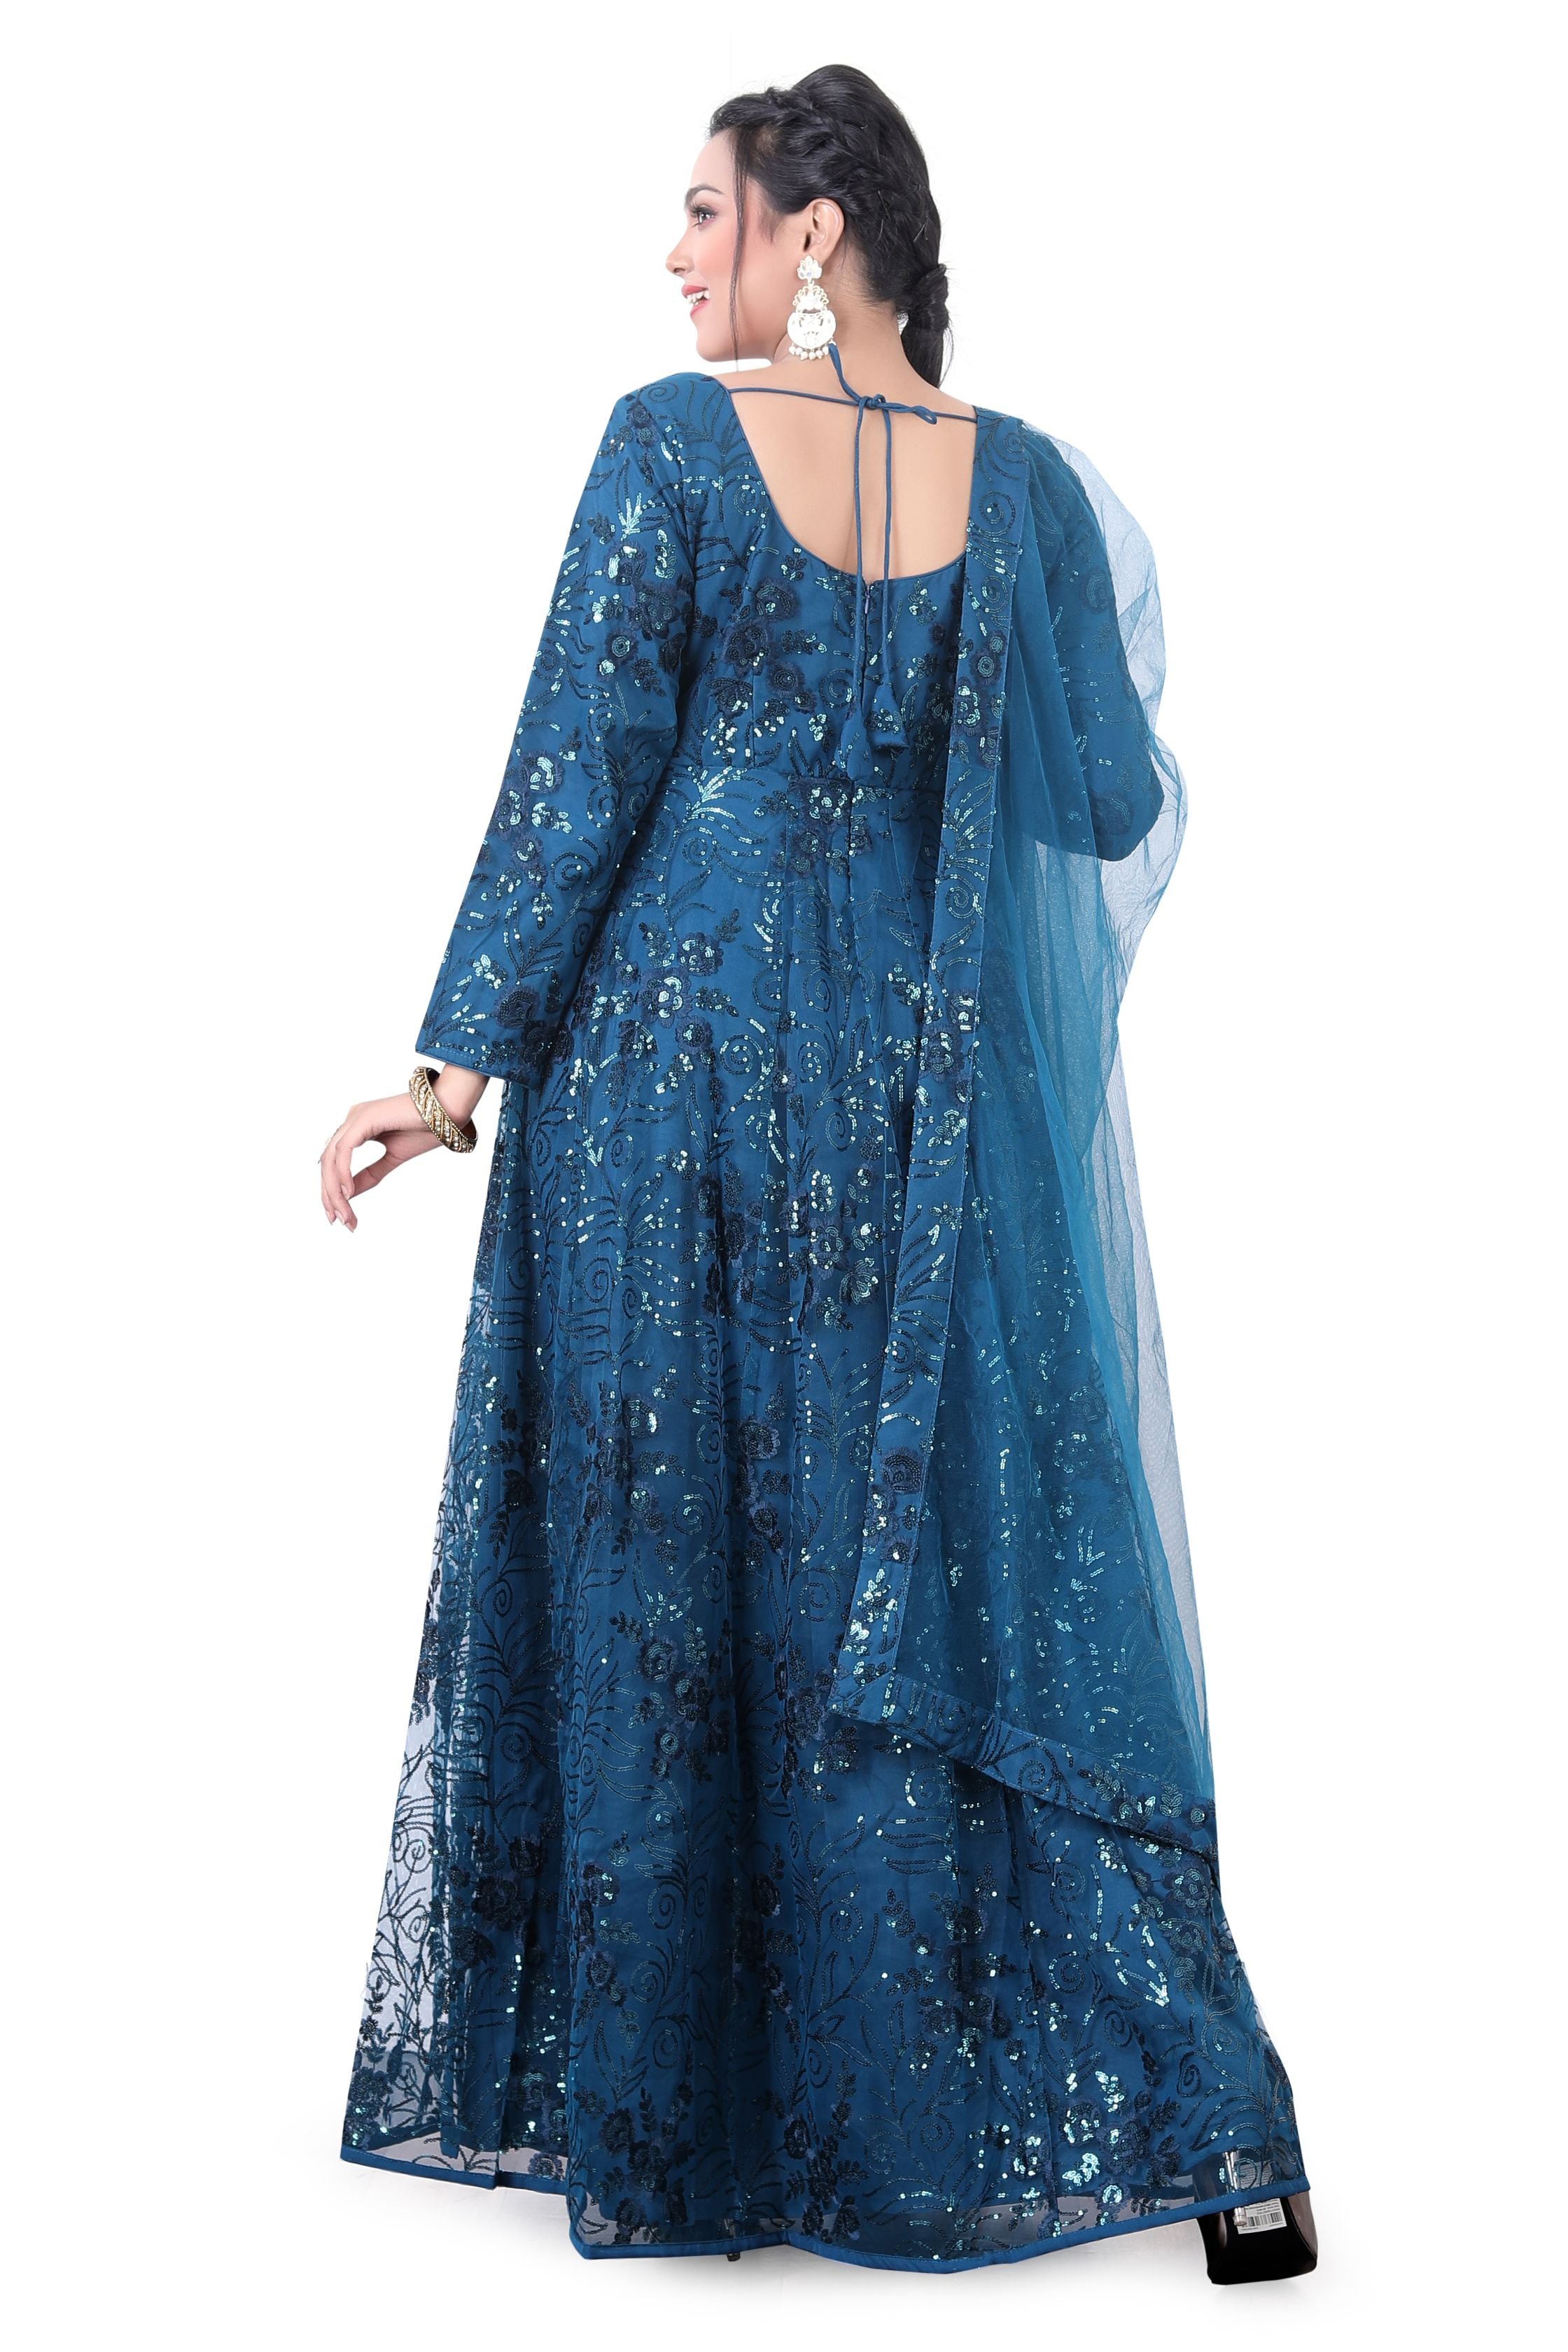 Peacock Blue Floor Length Anarkali Gown in Net ANS-5006